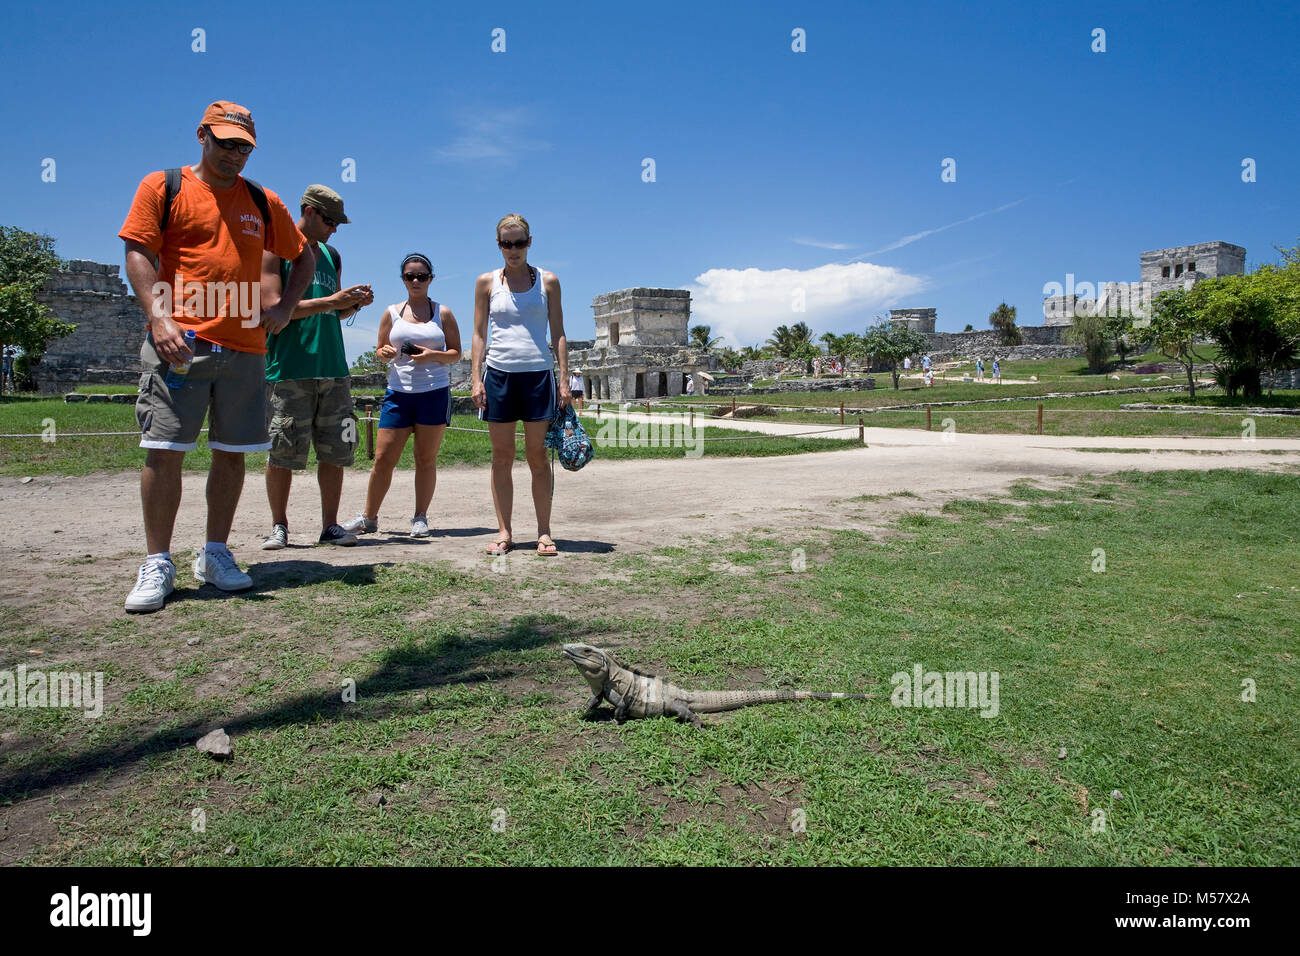 Les touristes regarder un lizzard en face de ruines Mayas, zone archéologique de Tulum, Tulum, Riviera Maya, Quintana Roo, Yucatan, Mexique, Caraïbes Banque D'Images